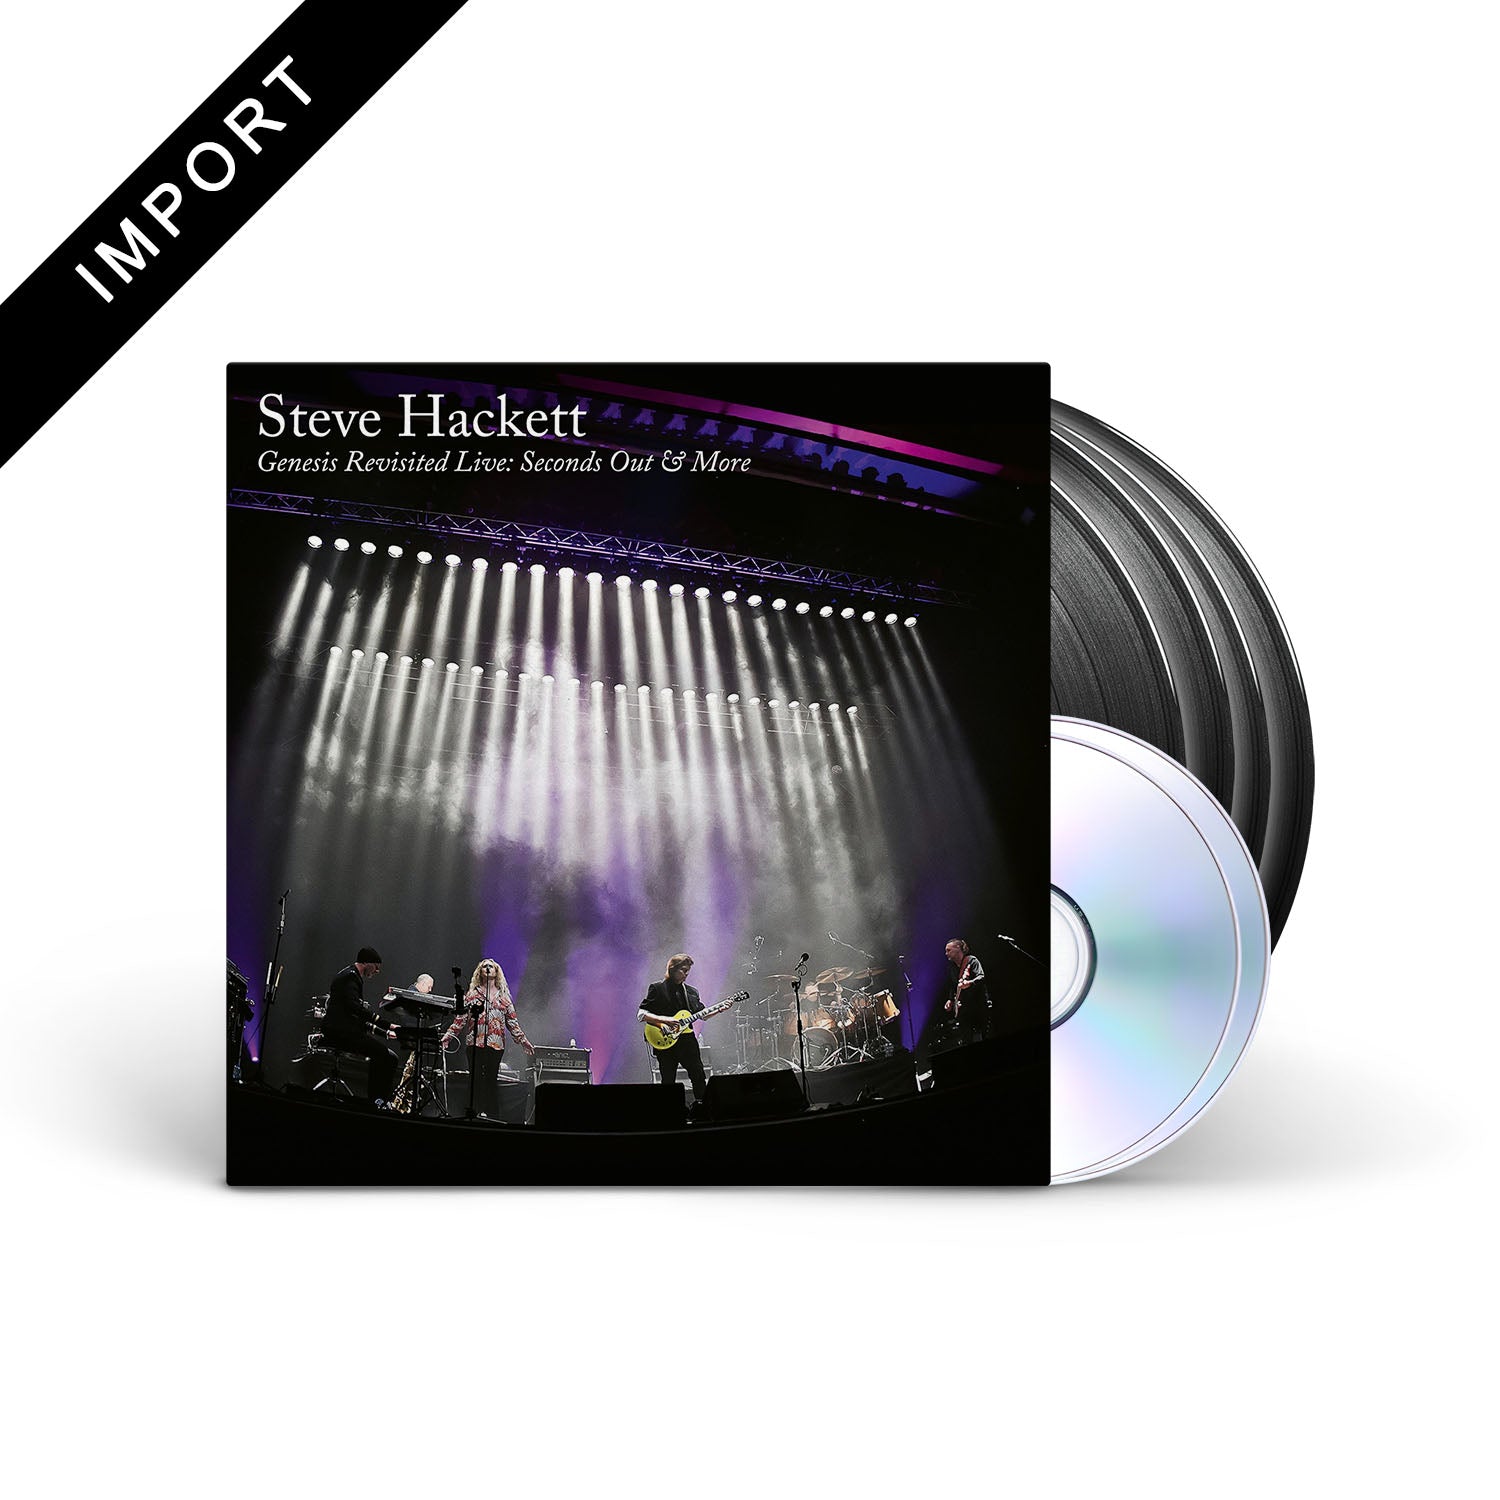 STEVE HACKETT - Genesis Revisited Live: Seconds Out & More - 3xLP + 2CD